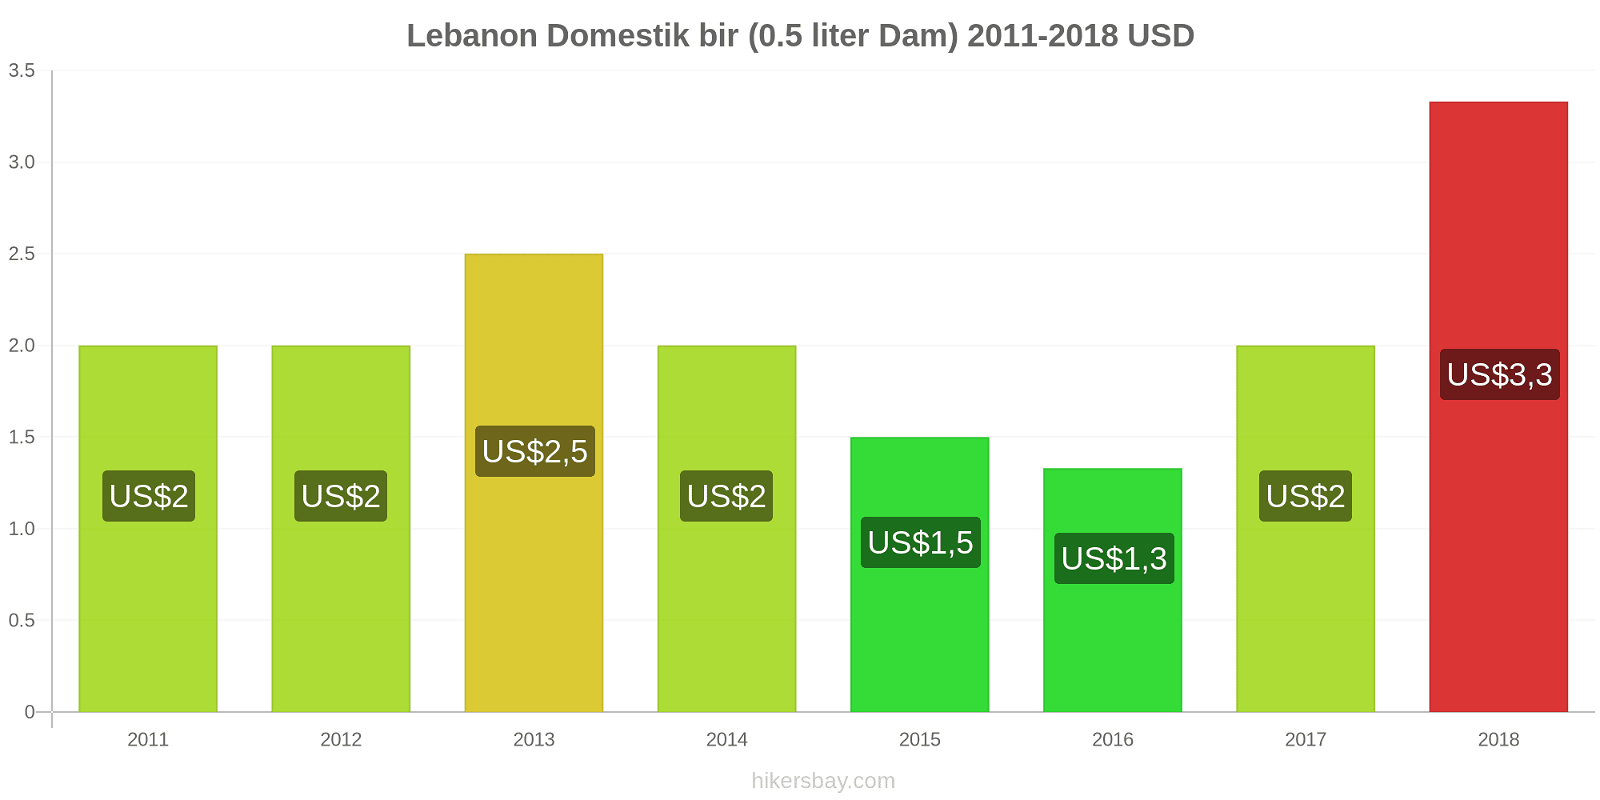 Lebanon perubahan harga Bir keran (0,5 liter) hikersbay.com